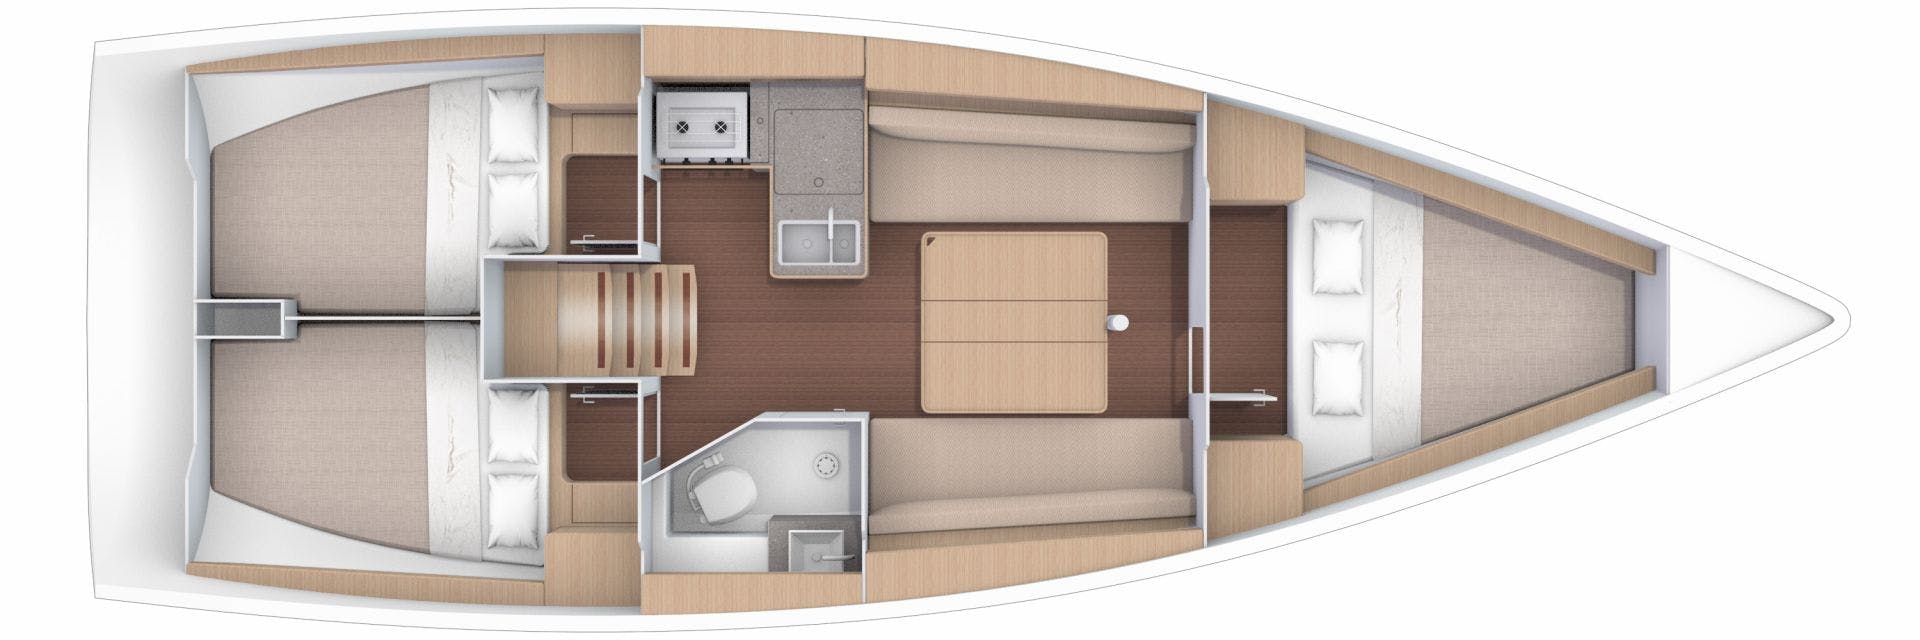 Floor plan image for yacht Dufour 360 - Rhapsody